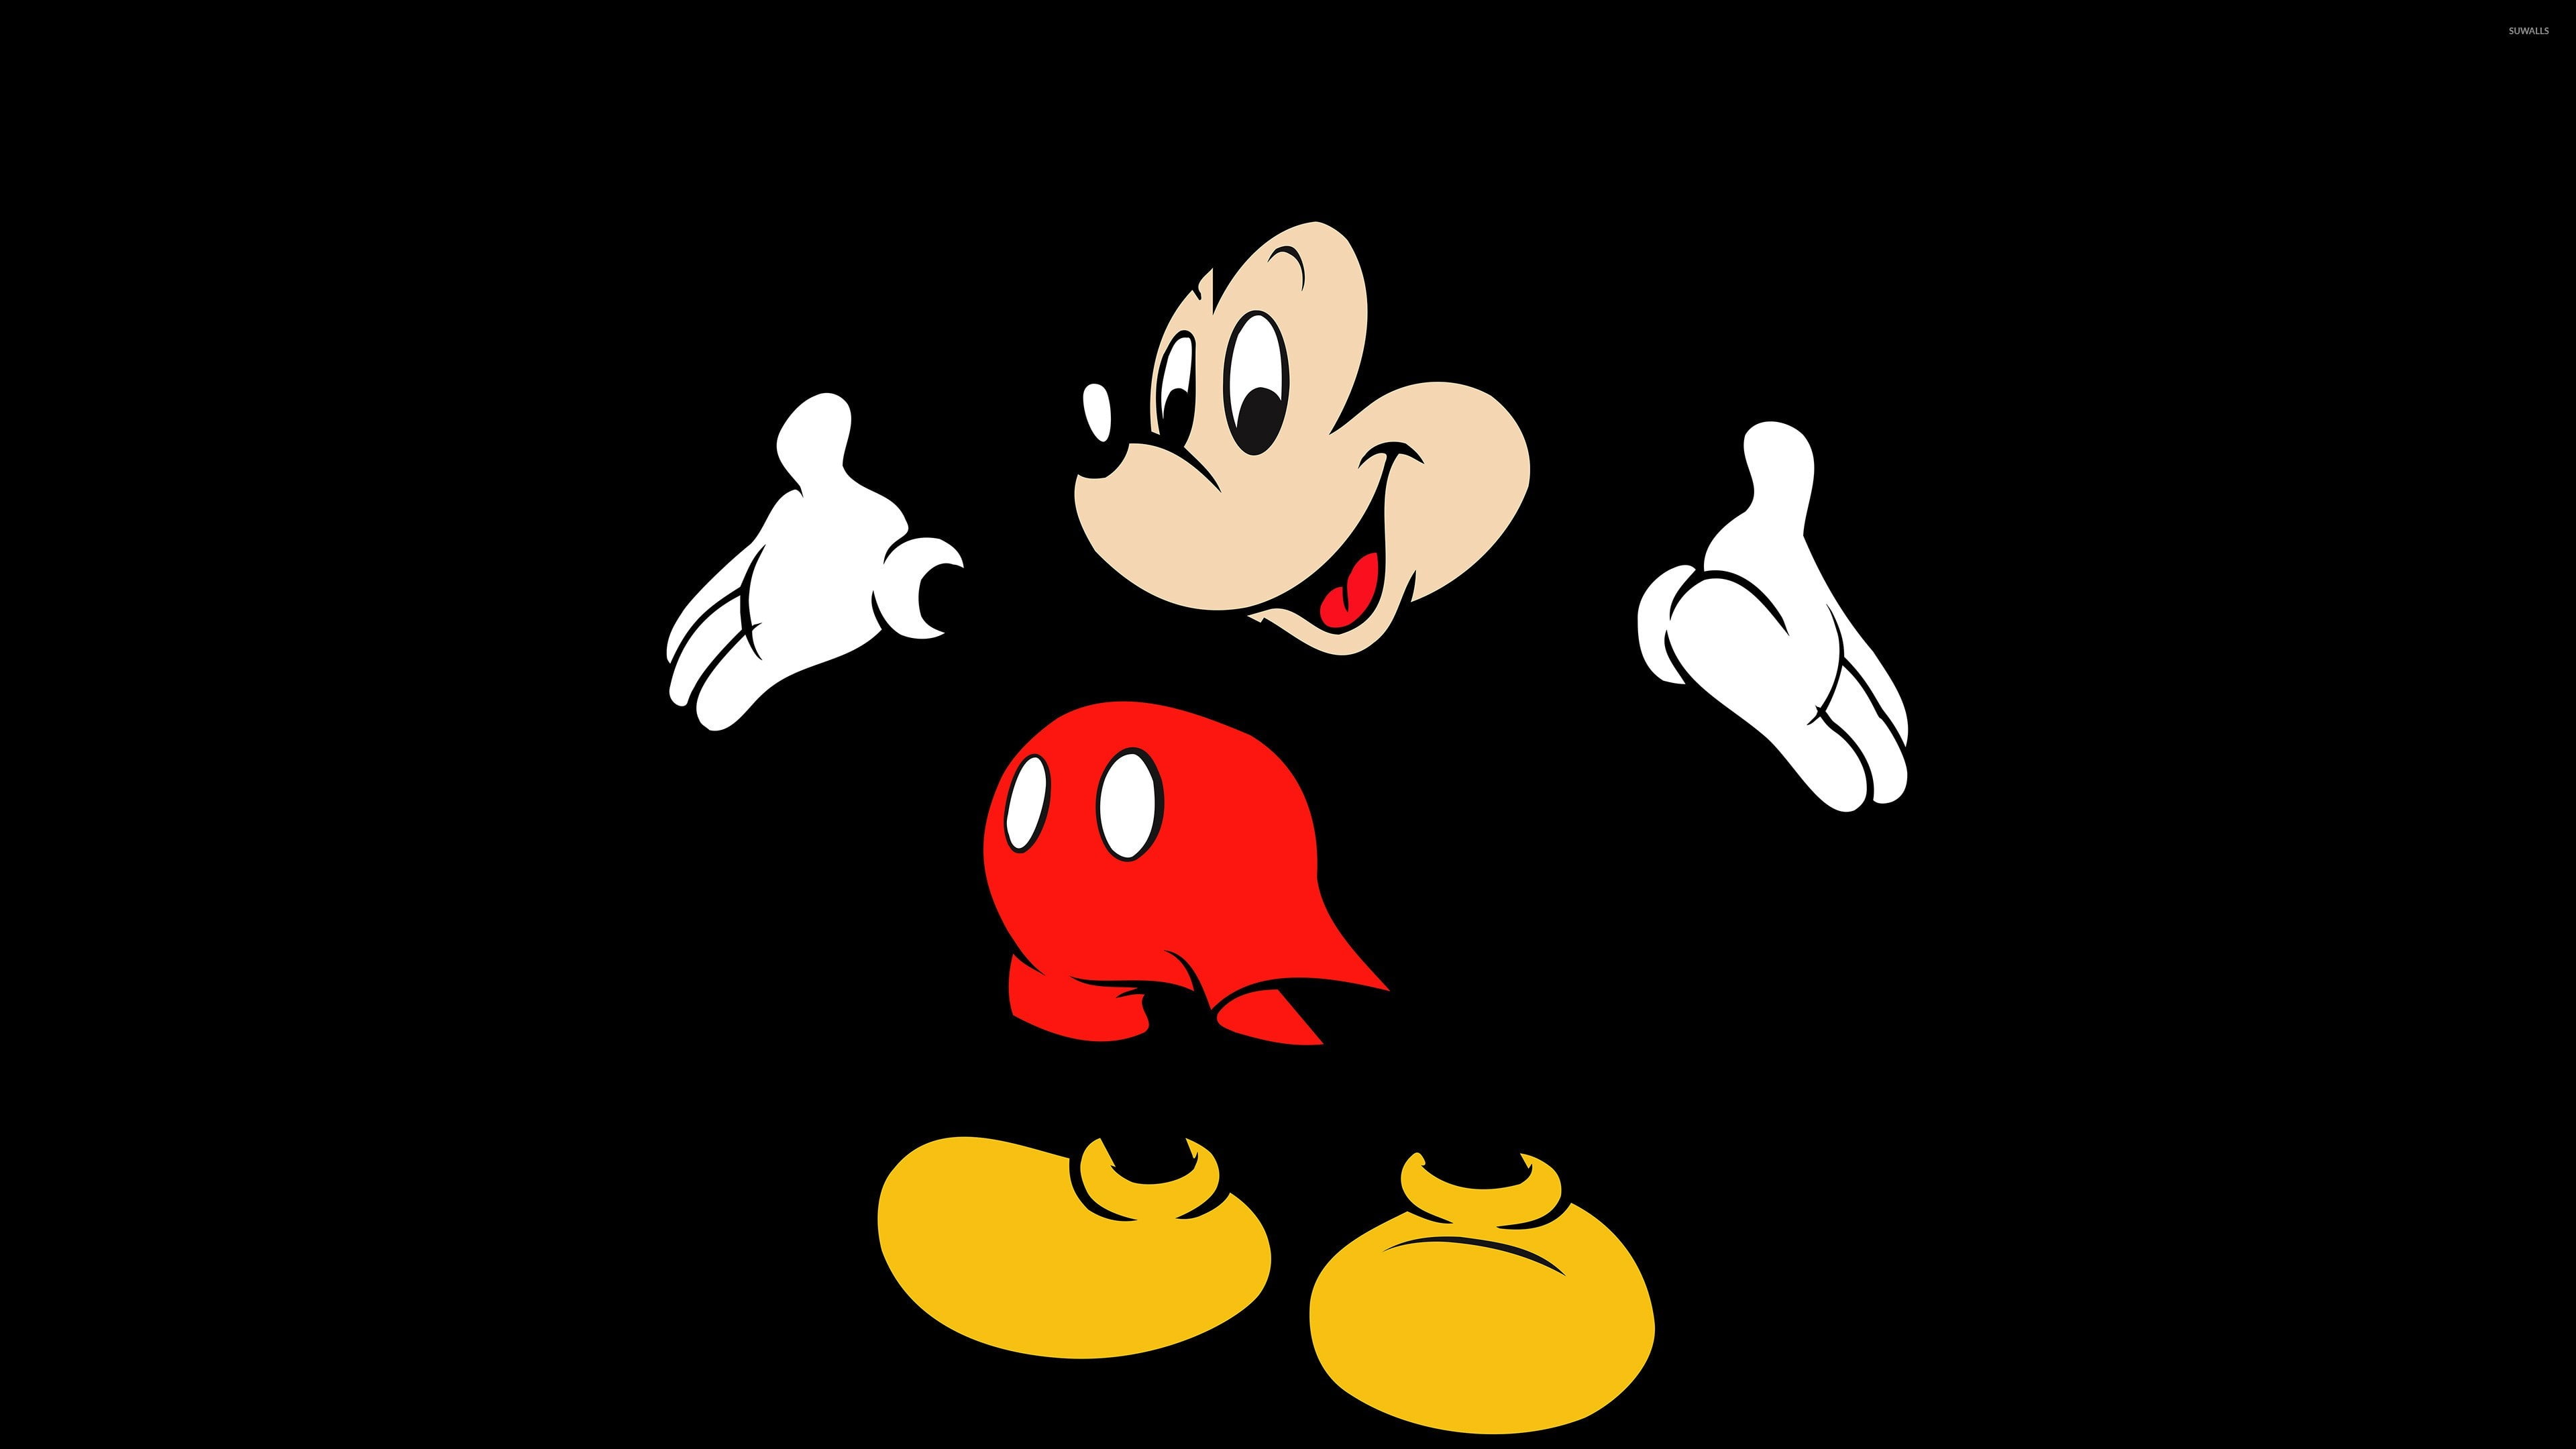 Mickey Mouse illustration, HD, 4K